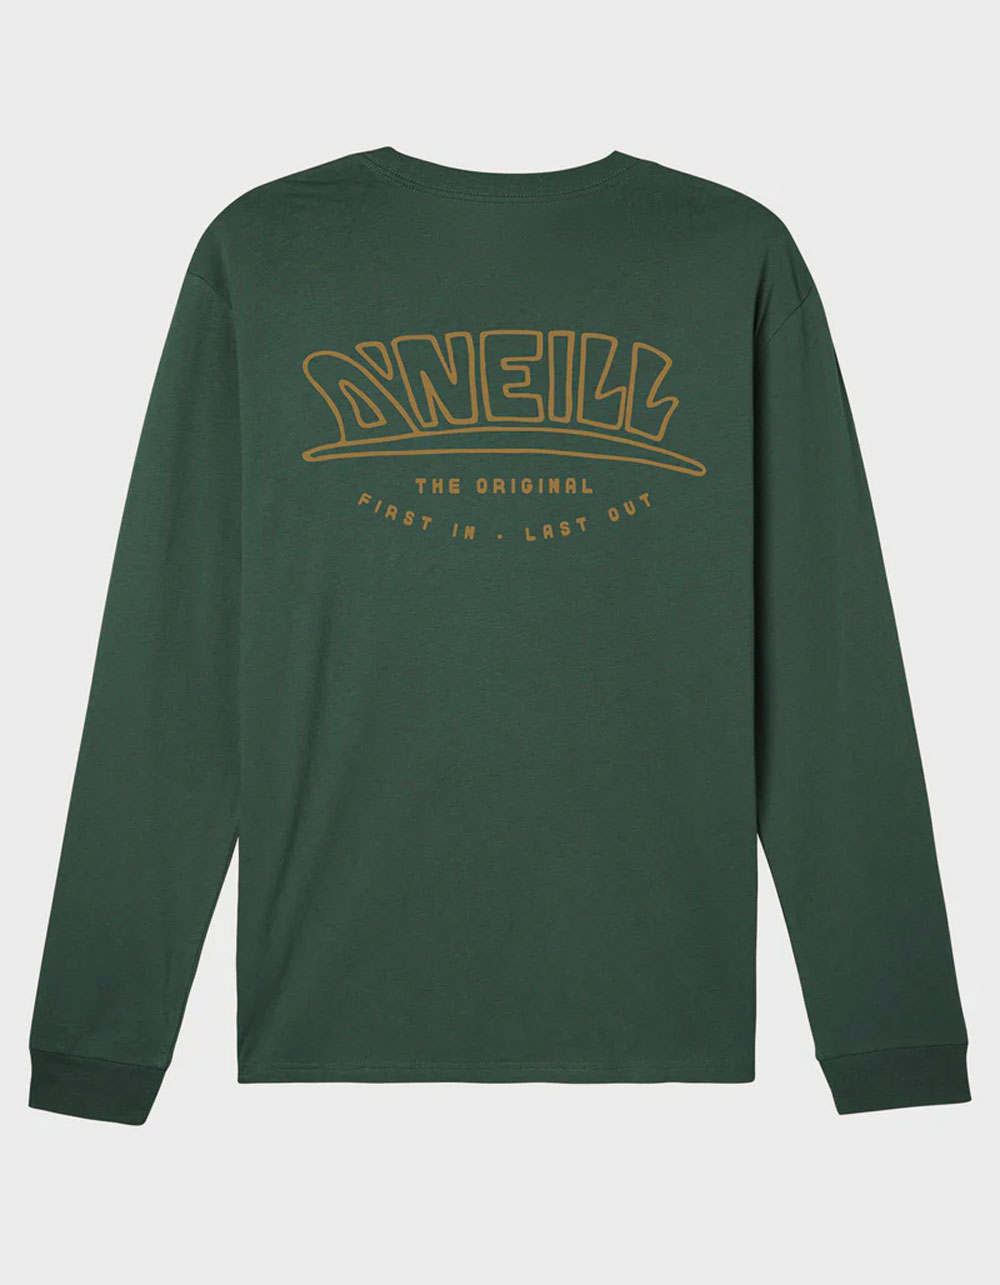 O'Neill Tatum Long Sleeve Floral Graphic T-Shirt - S